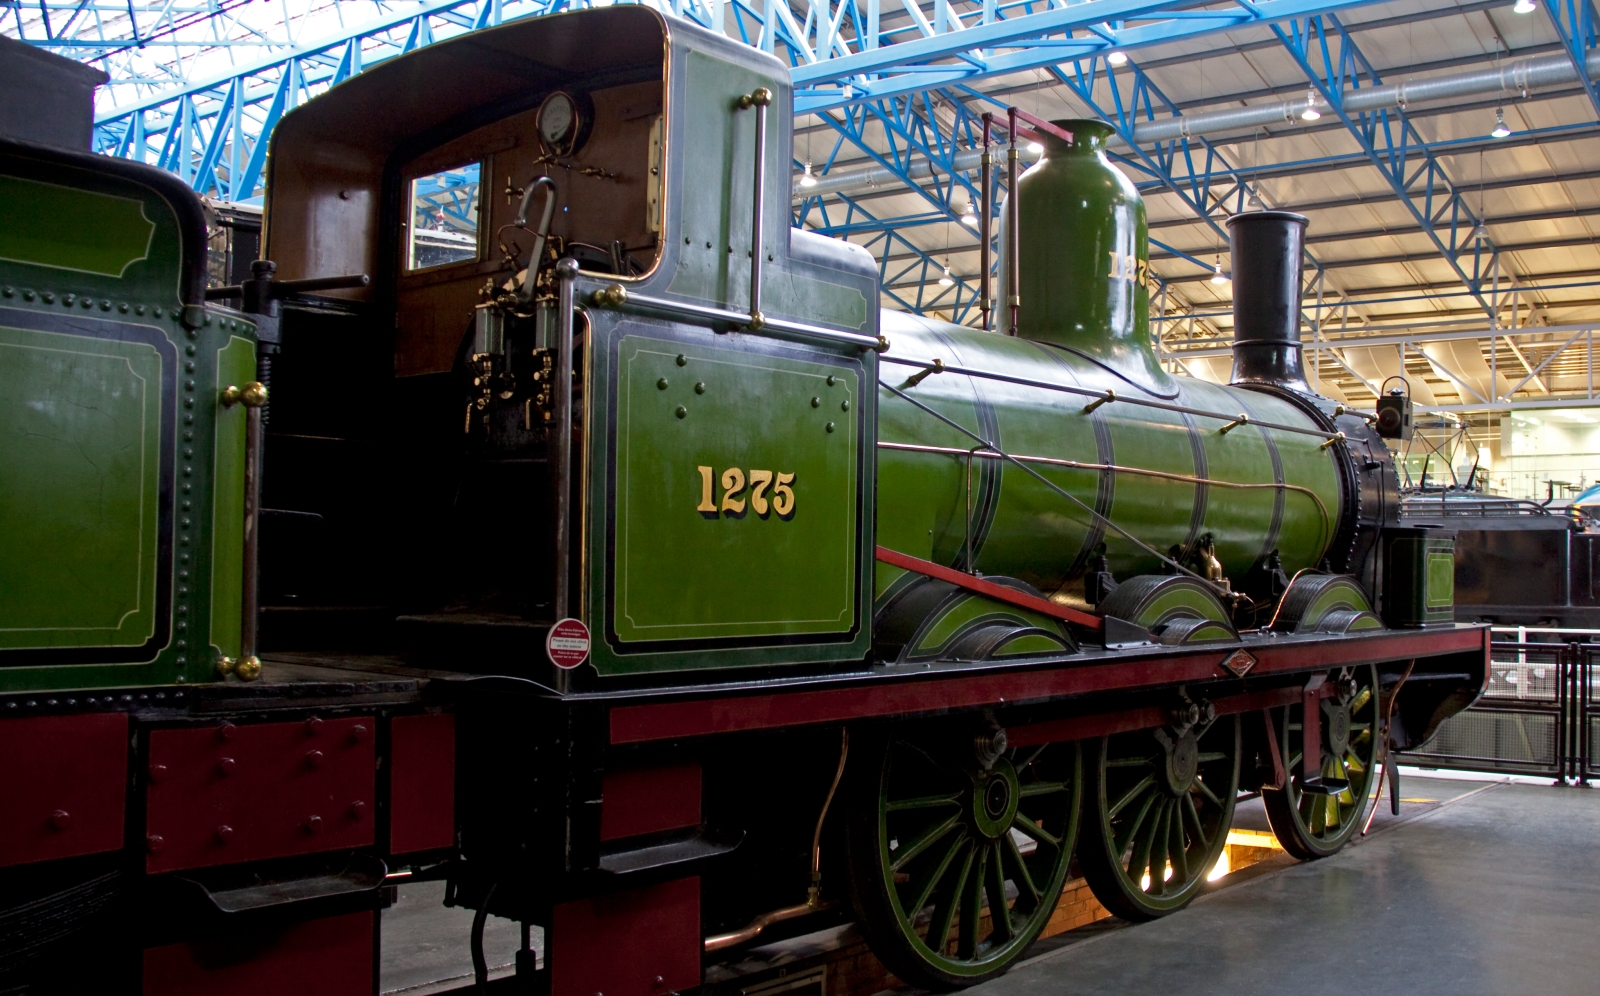 No. 1275 in National Railway Museum in York